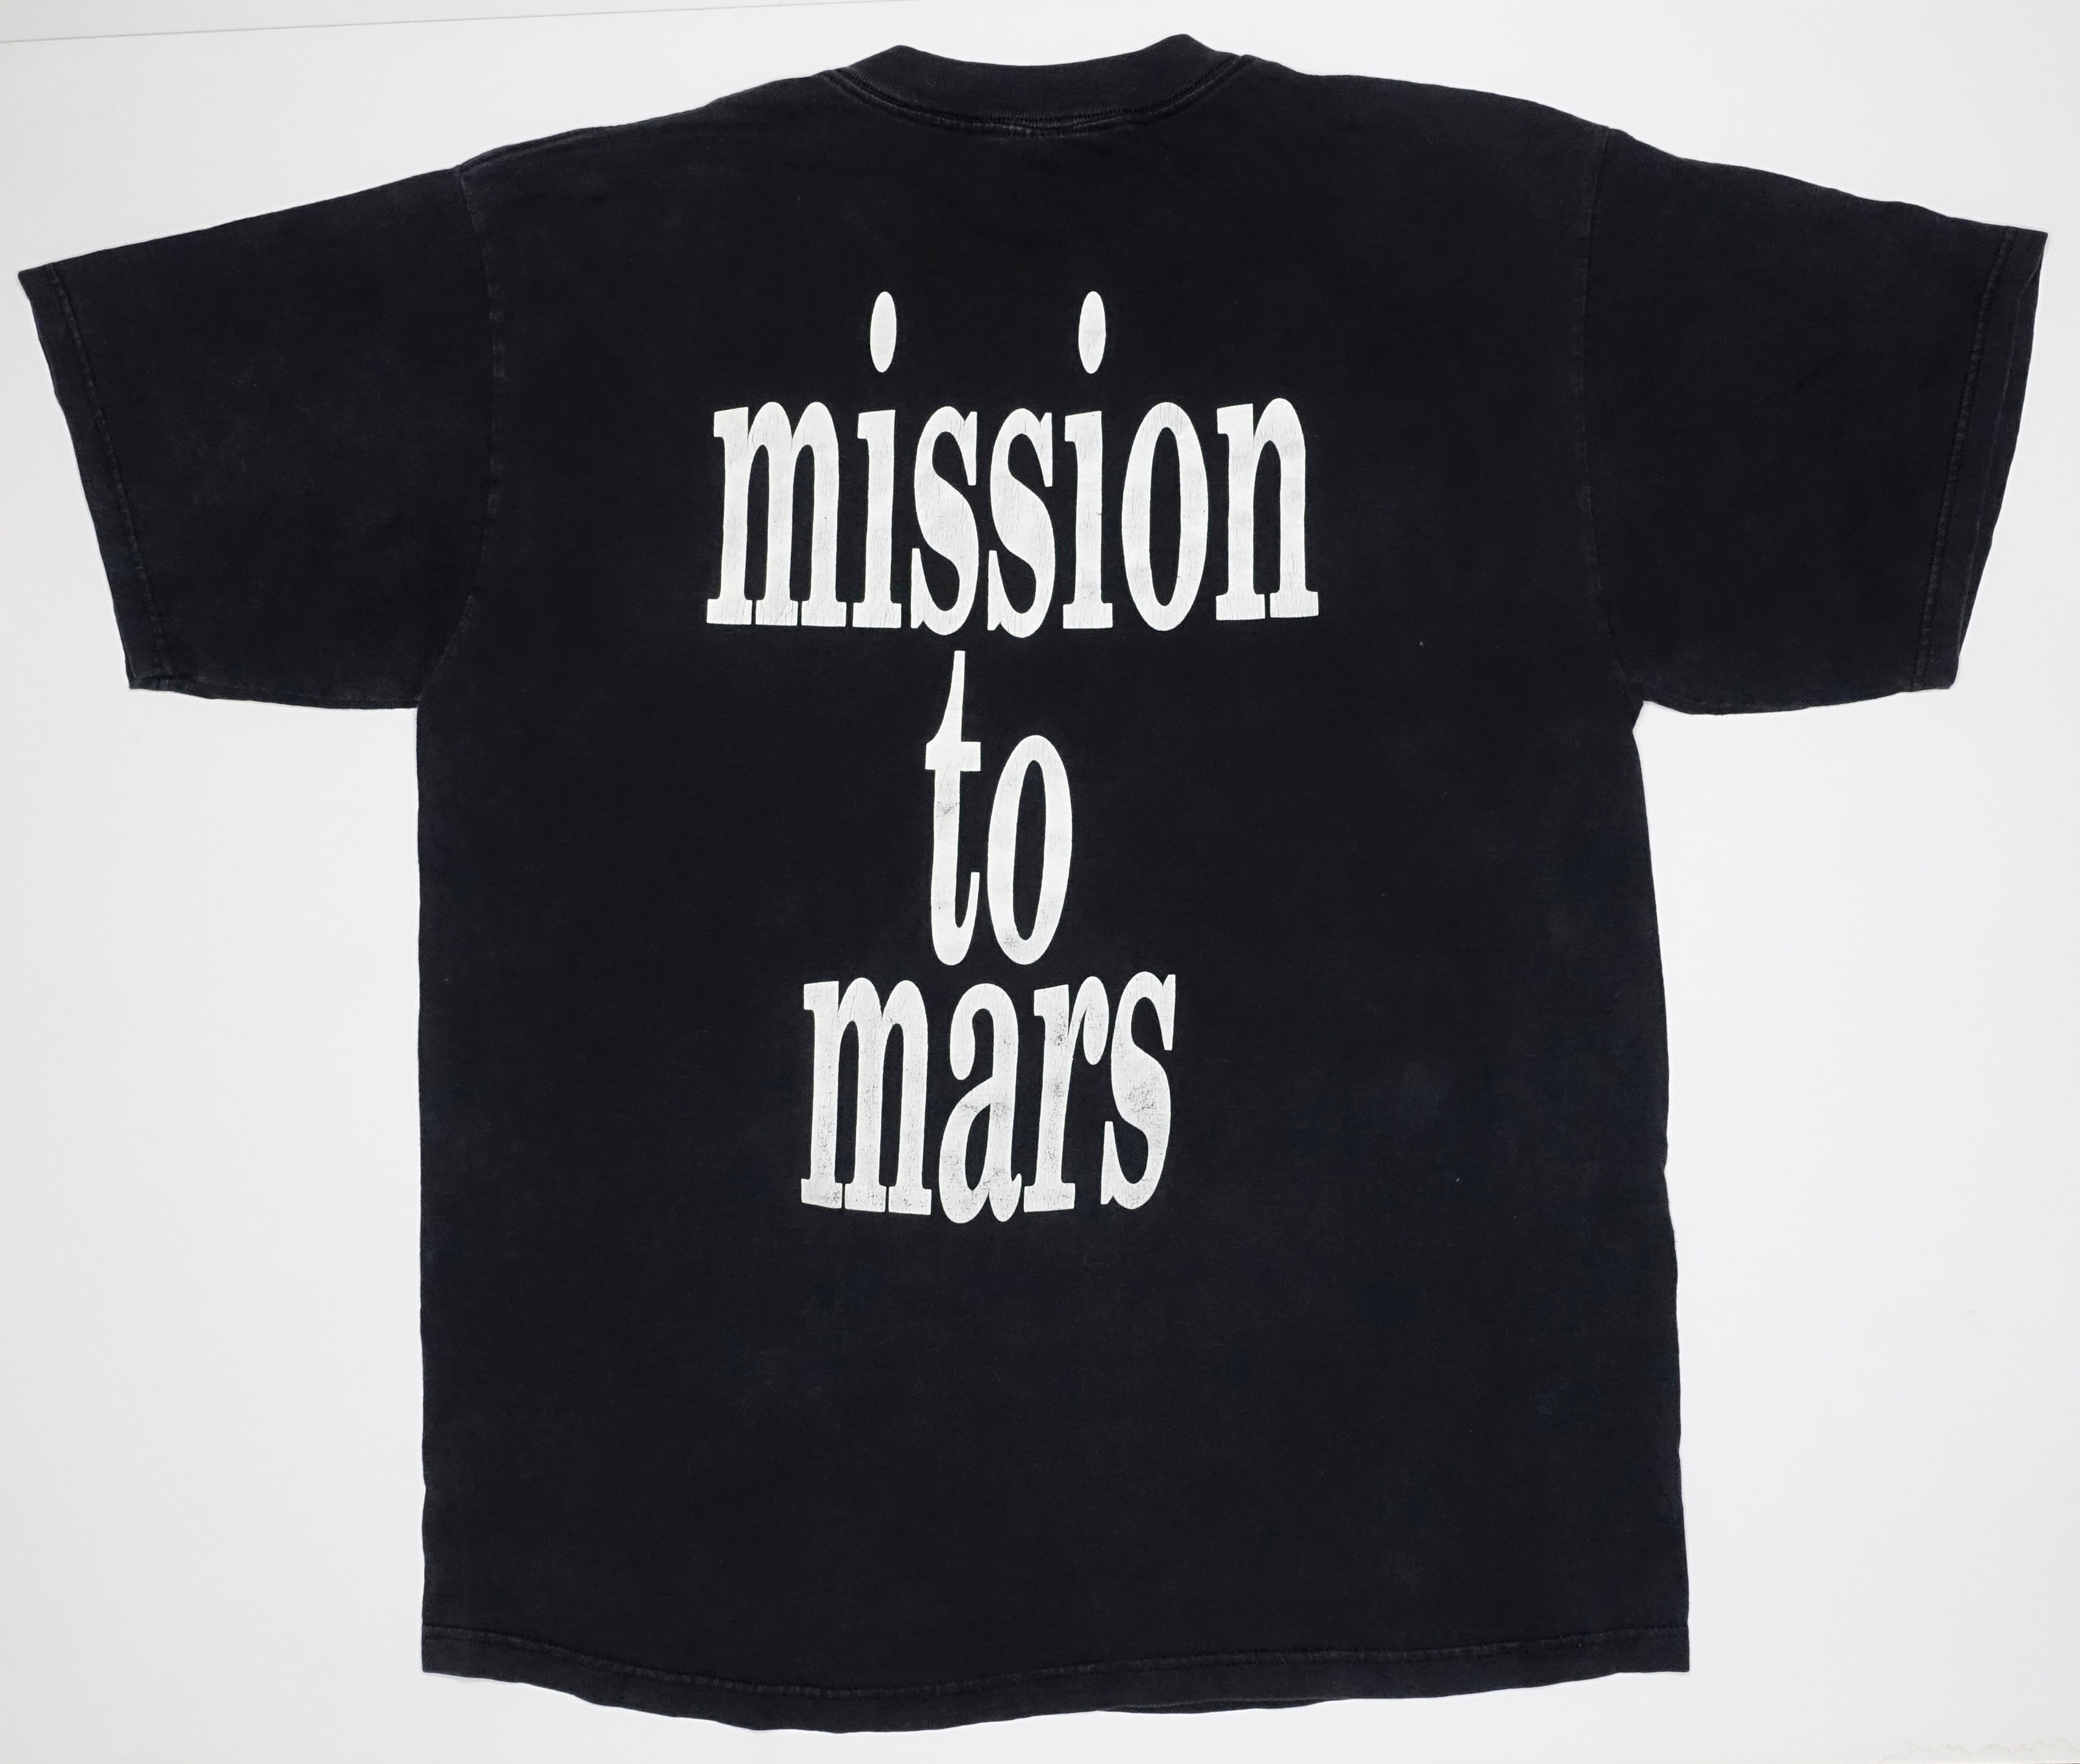 Smashing Pumpkins - Gish / Mission To Mars Devil 1991-92Tour Shirt Size XL